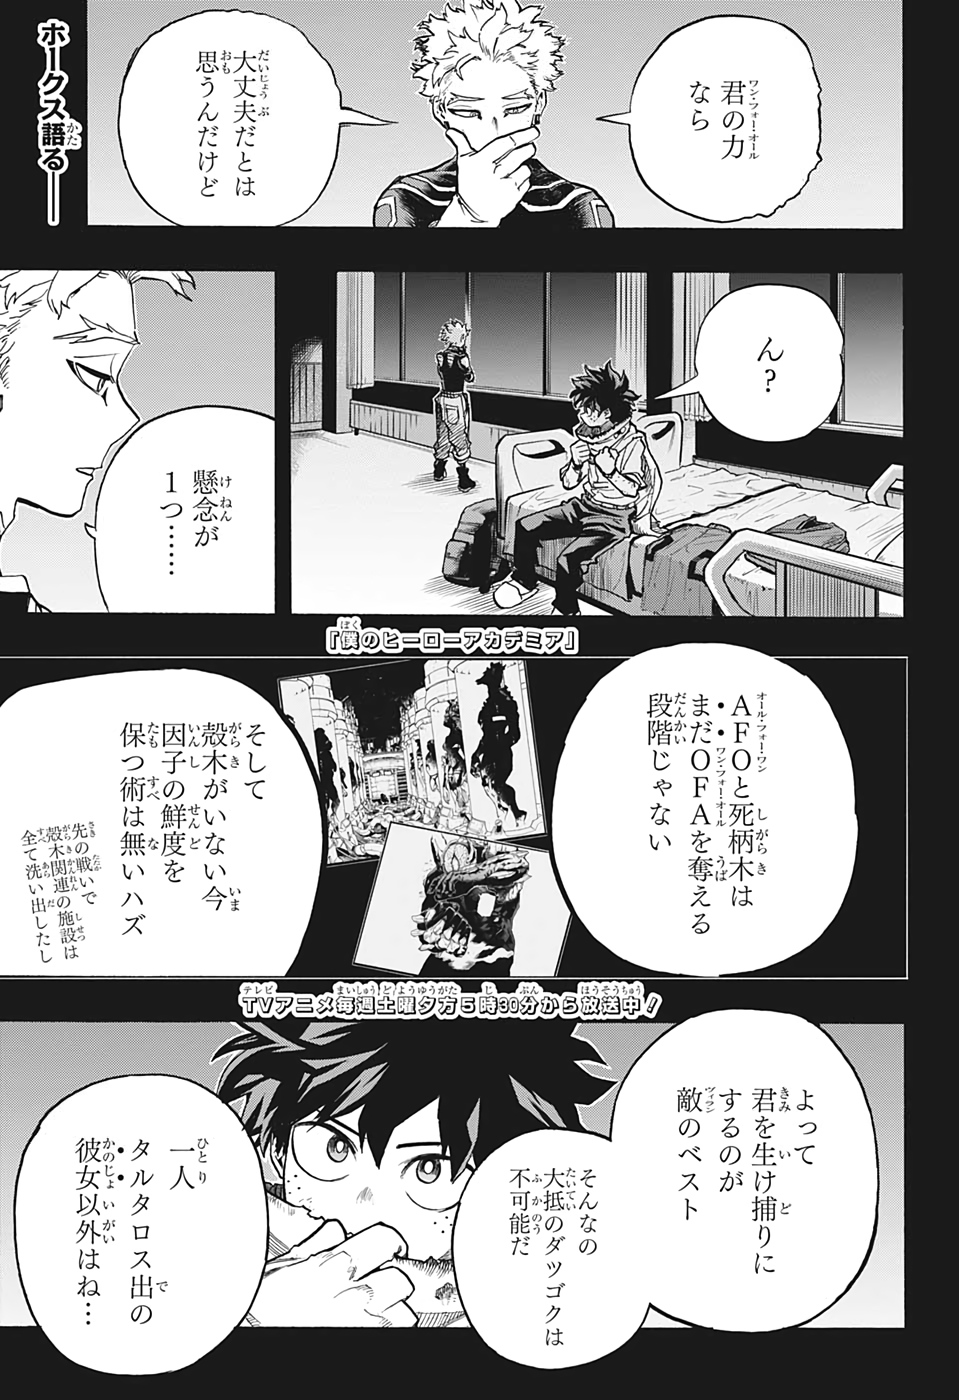 Boku no Hero Academia - Chapter 312 - Page 1